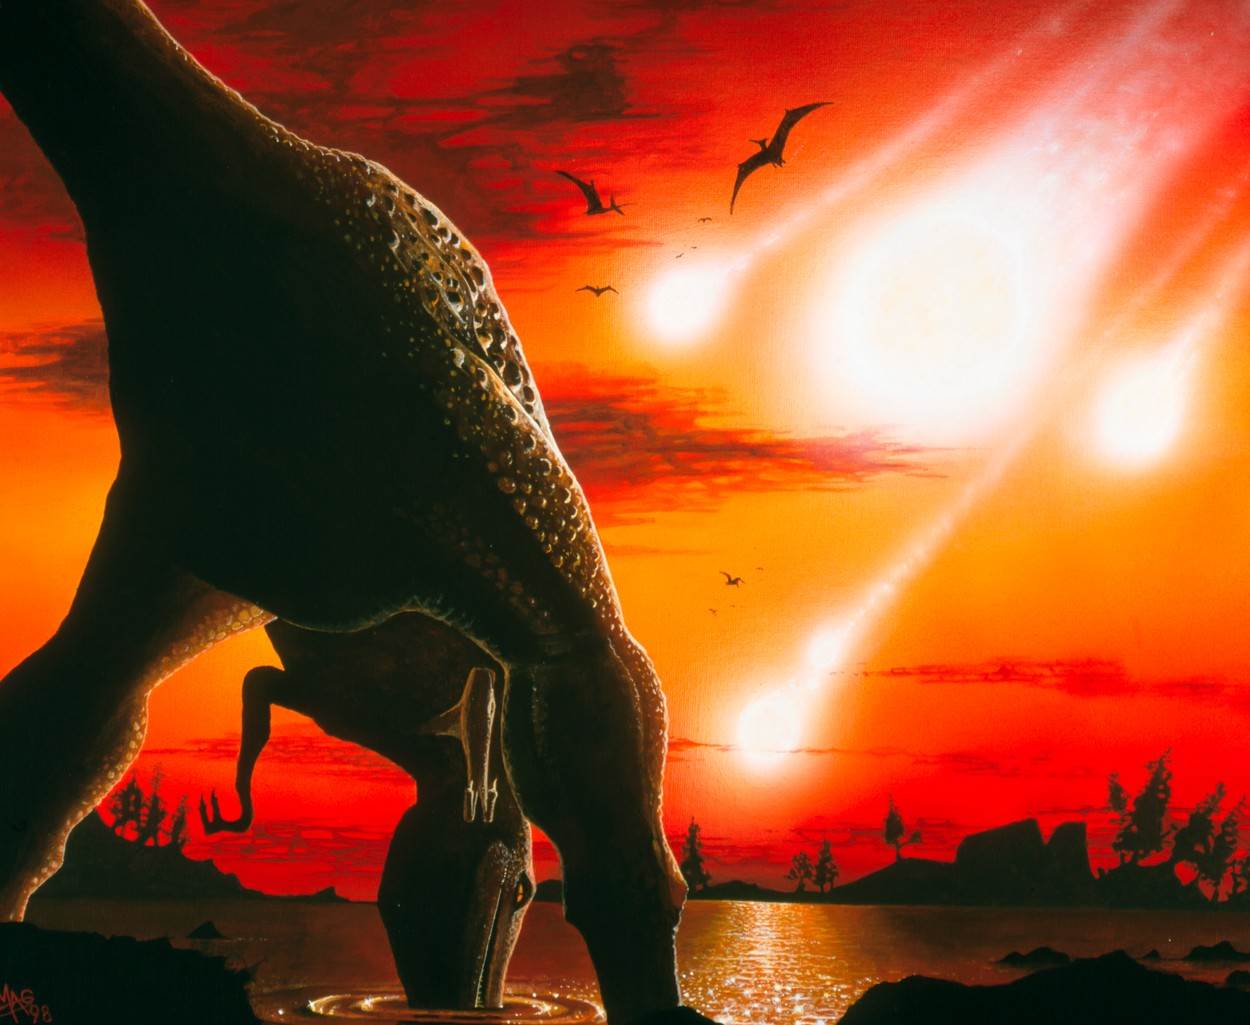  tyrannosaurus;asteroid;strike;impact;artwork;cretaceous;dinosaur;extinction;tyrannosaur;meteor;death;of;dinosaurs;mass;k;t;palaeontology;paleontology;animal;animals;kt;event 